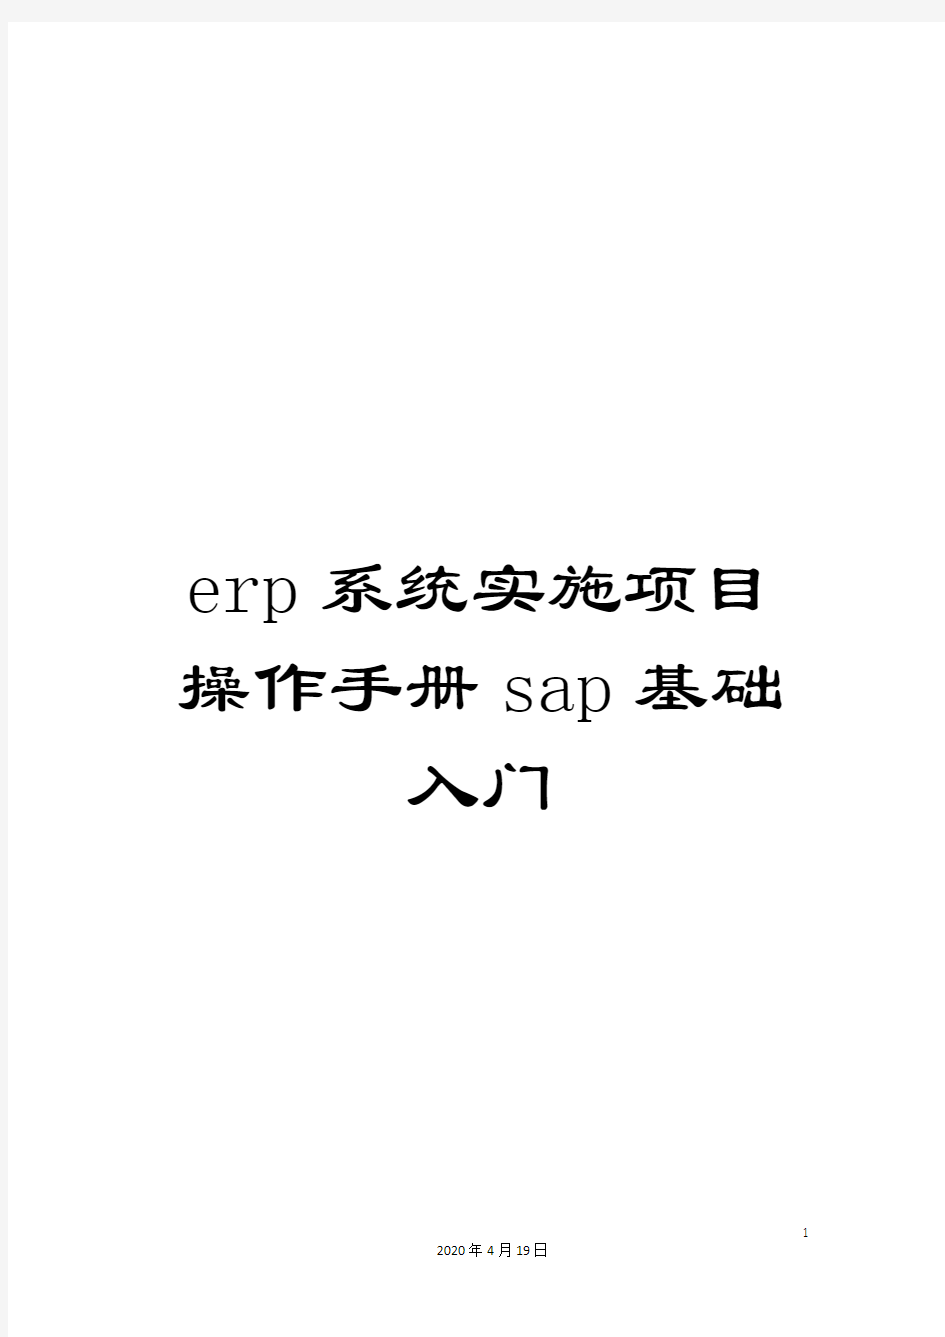 erp系统实施项目操作手册sap基础入门